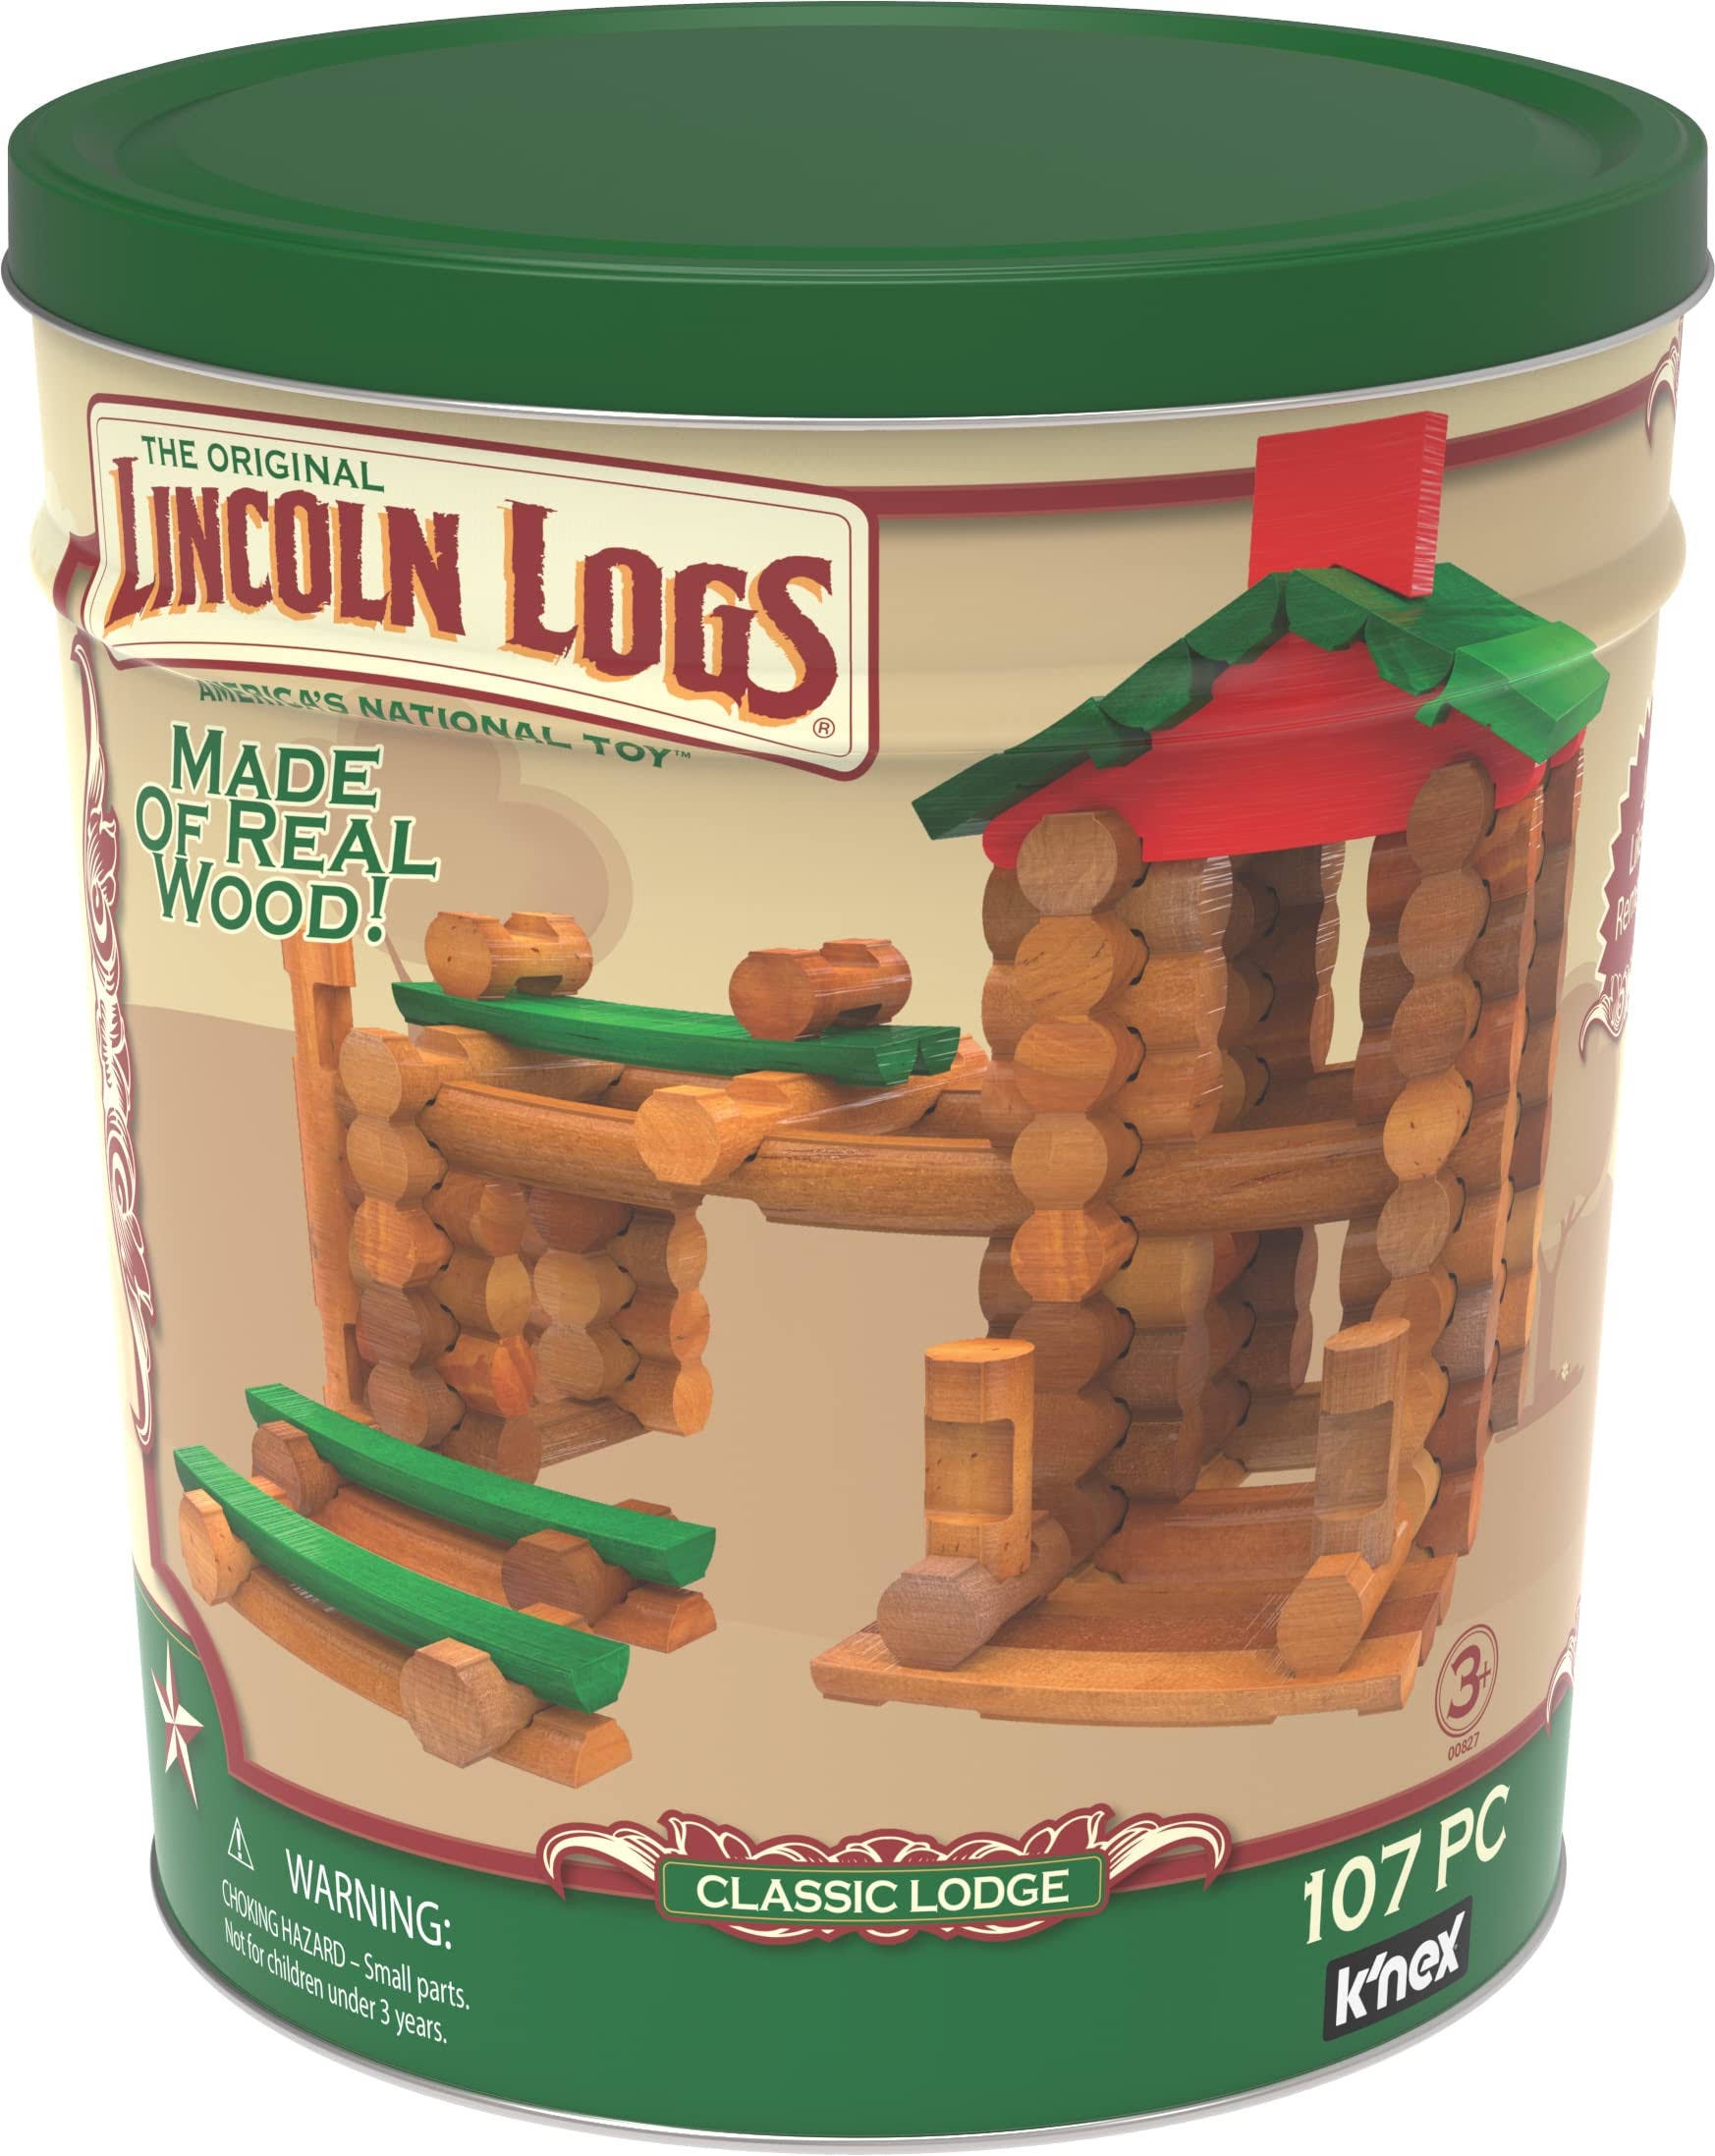 Nostalgic Lincoln Logs Classic Lodge Building Kit | Image